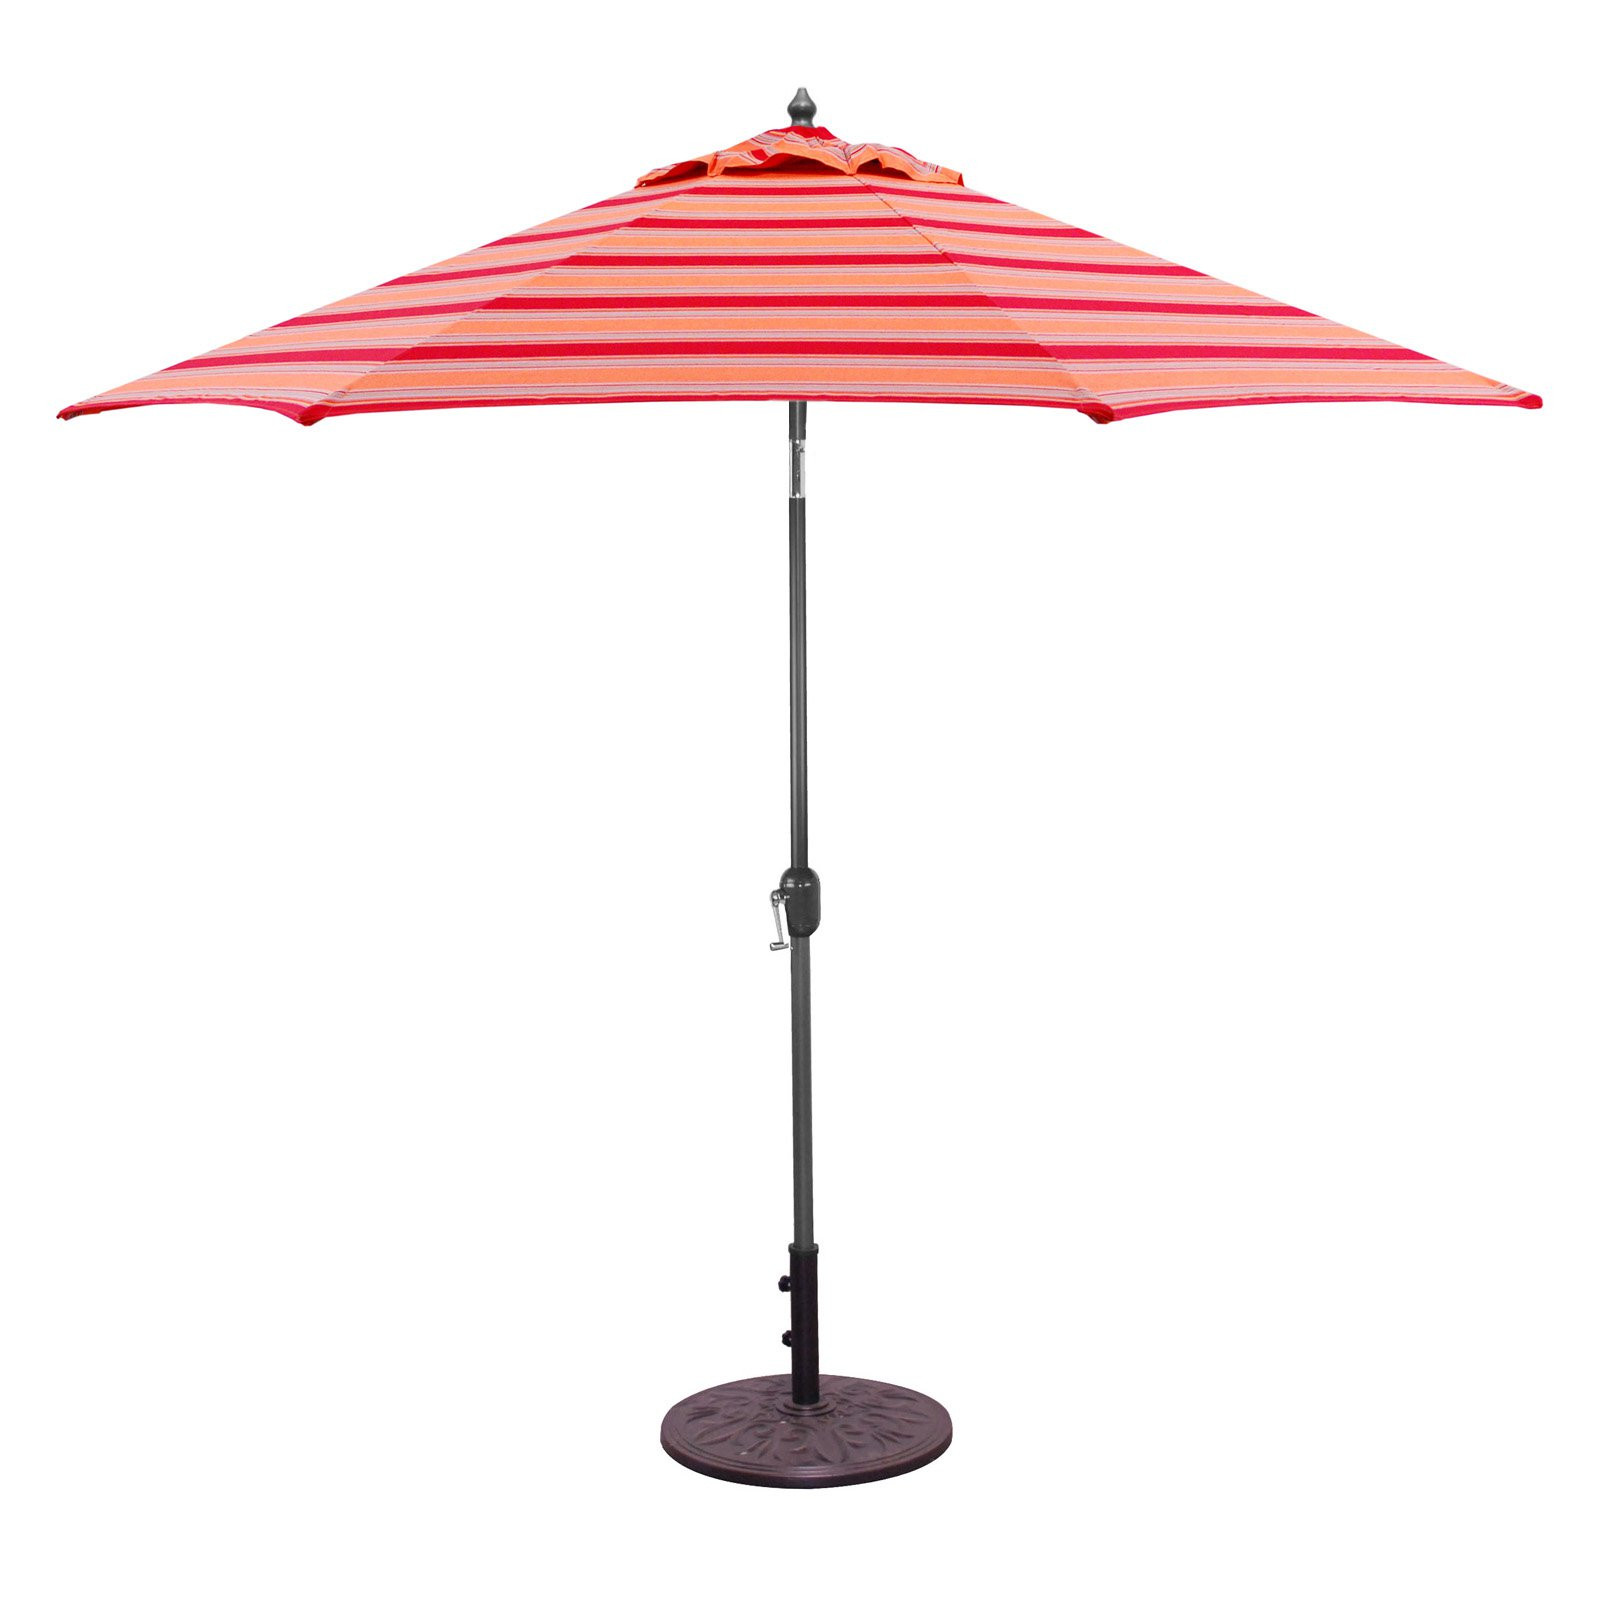 Best ideas about Walmart Patio Umbrella
. Save or Pin Galtech 9 ft Sunbrella Aluminum Patio Umbrella Walmart Now.